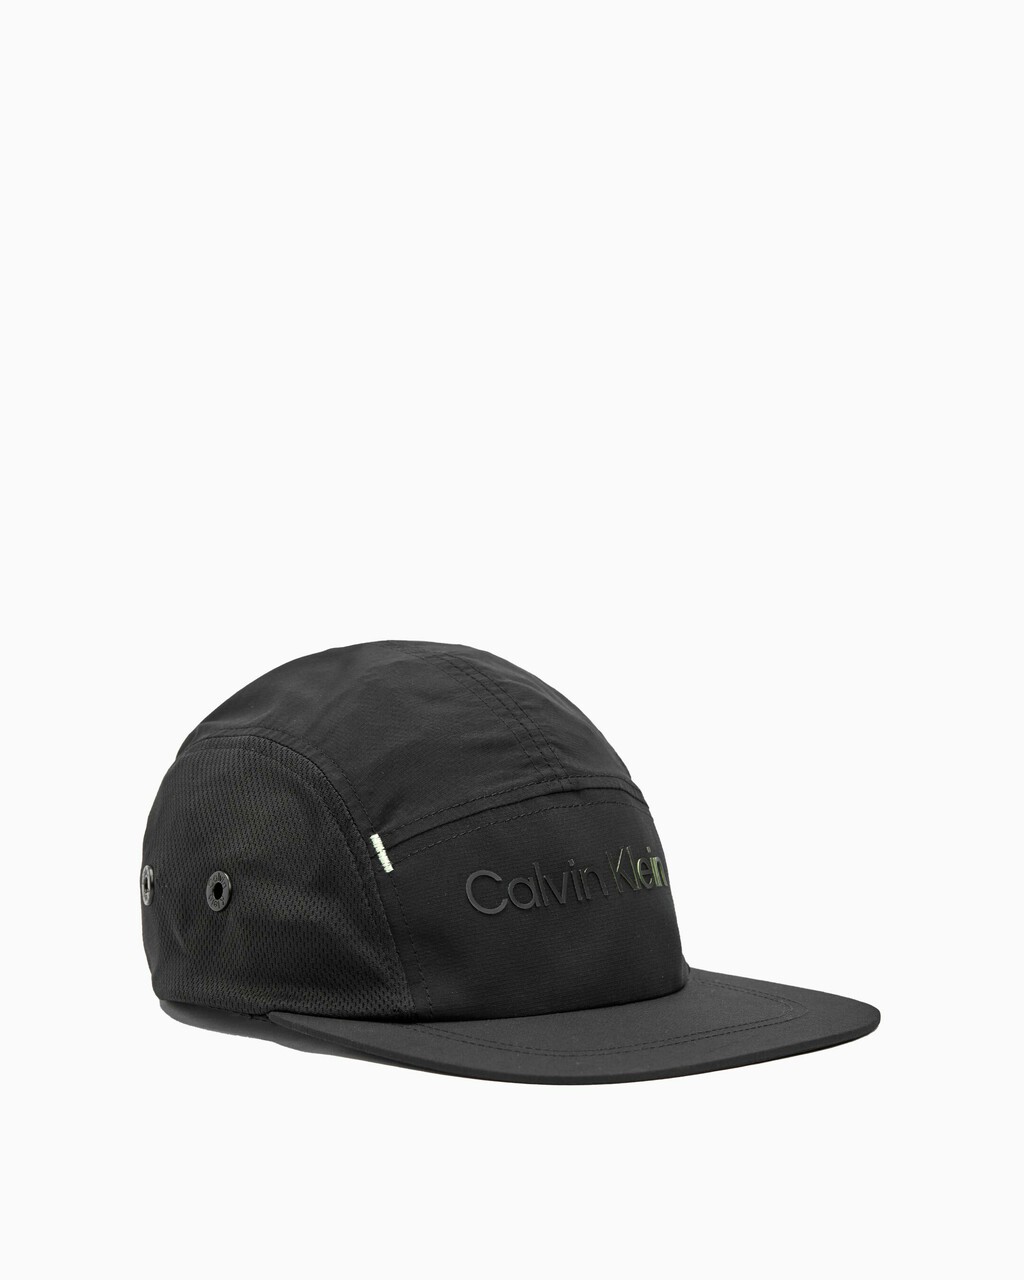 EXPANDABLE MODULAR CAP, BLACK, hi-res